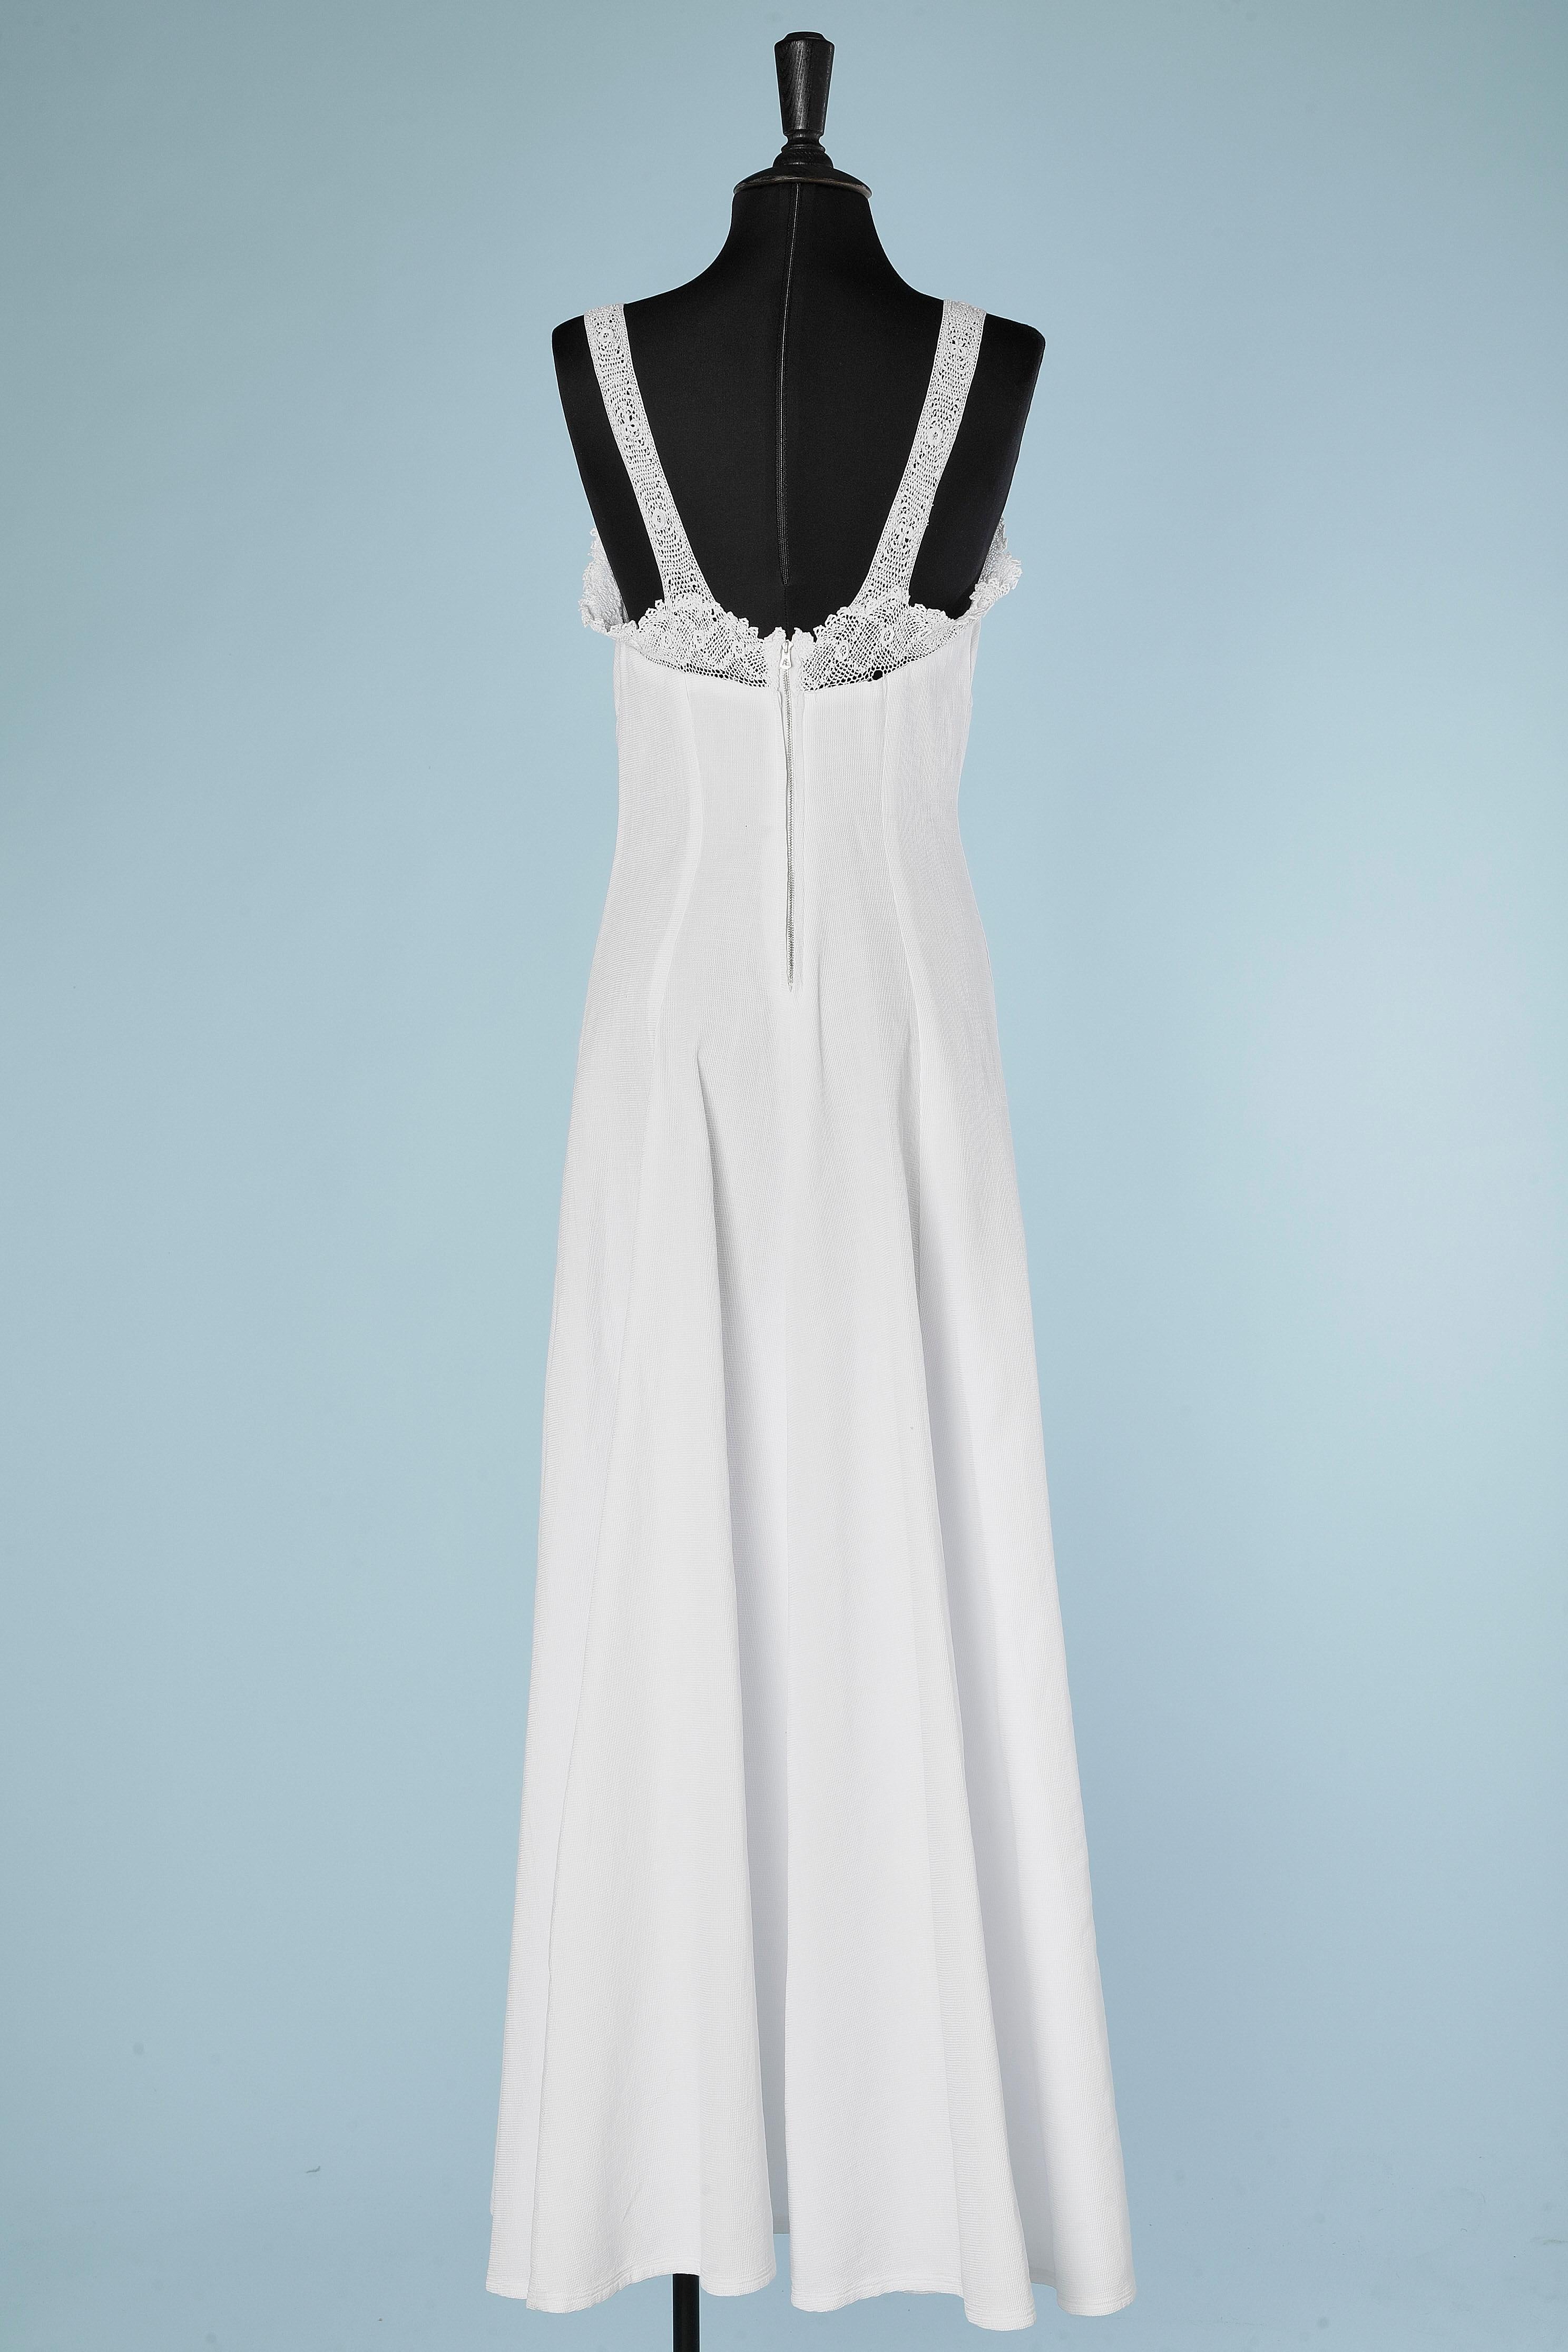 White cotton piqué wedding dress with lace edge and boléro Circa 1930 For Sale 2